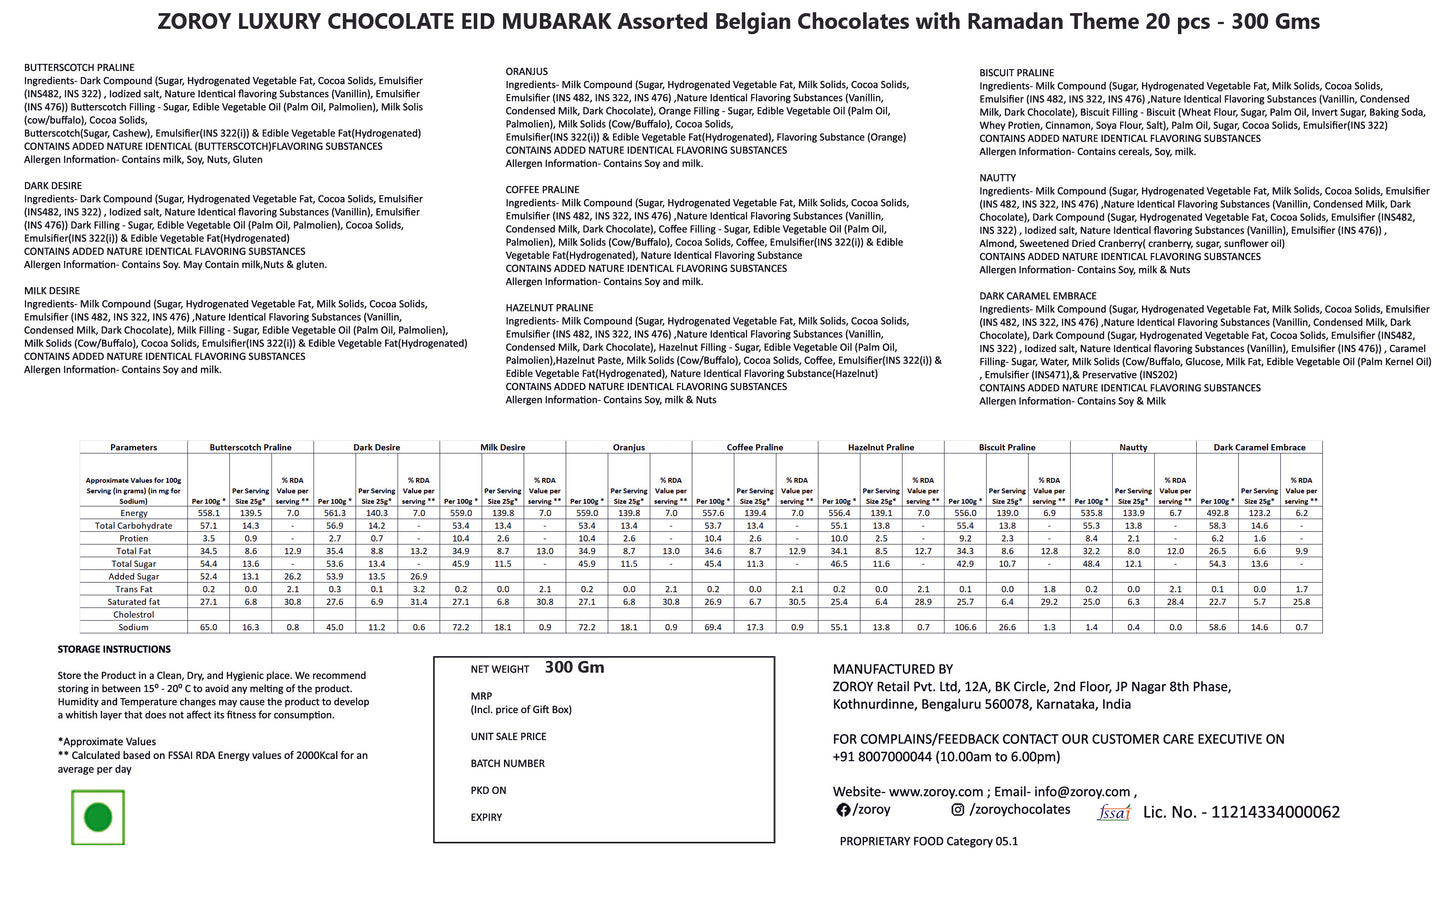 ZOROY EID & Ramadan Treat Box of 20 Assorted Belgian Dates and Chocolates - 300 Gms